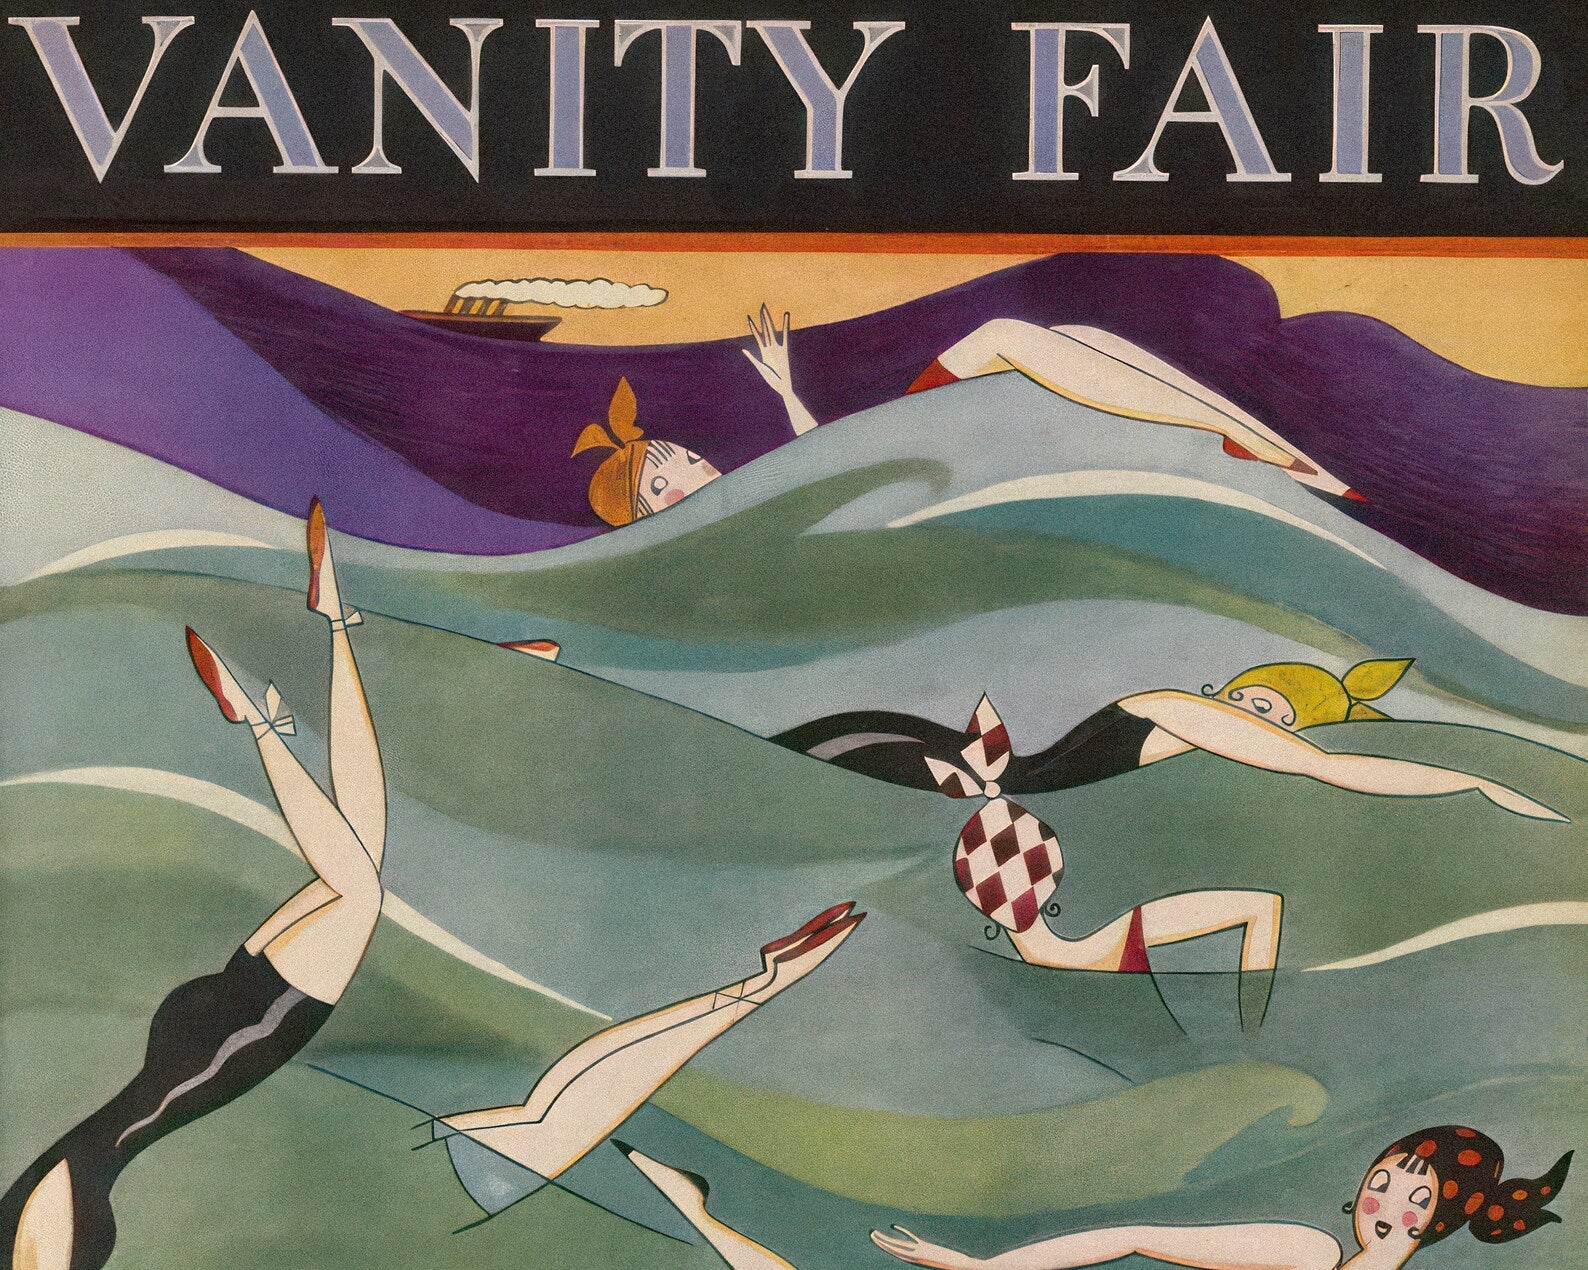 Annie Harriet Fish "February 1924" Vintage Vanity Fair Magazine Cover - Mabon Gallery